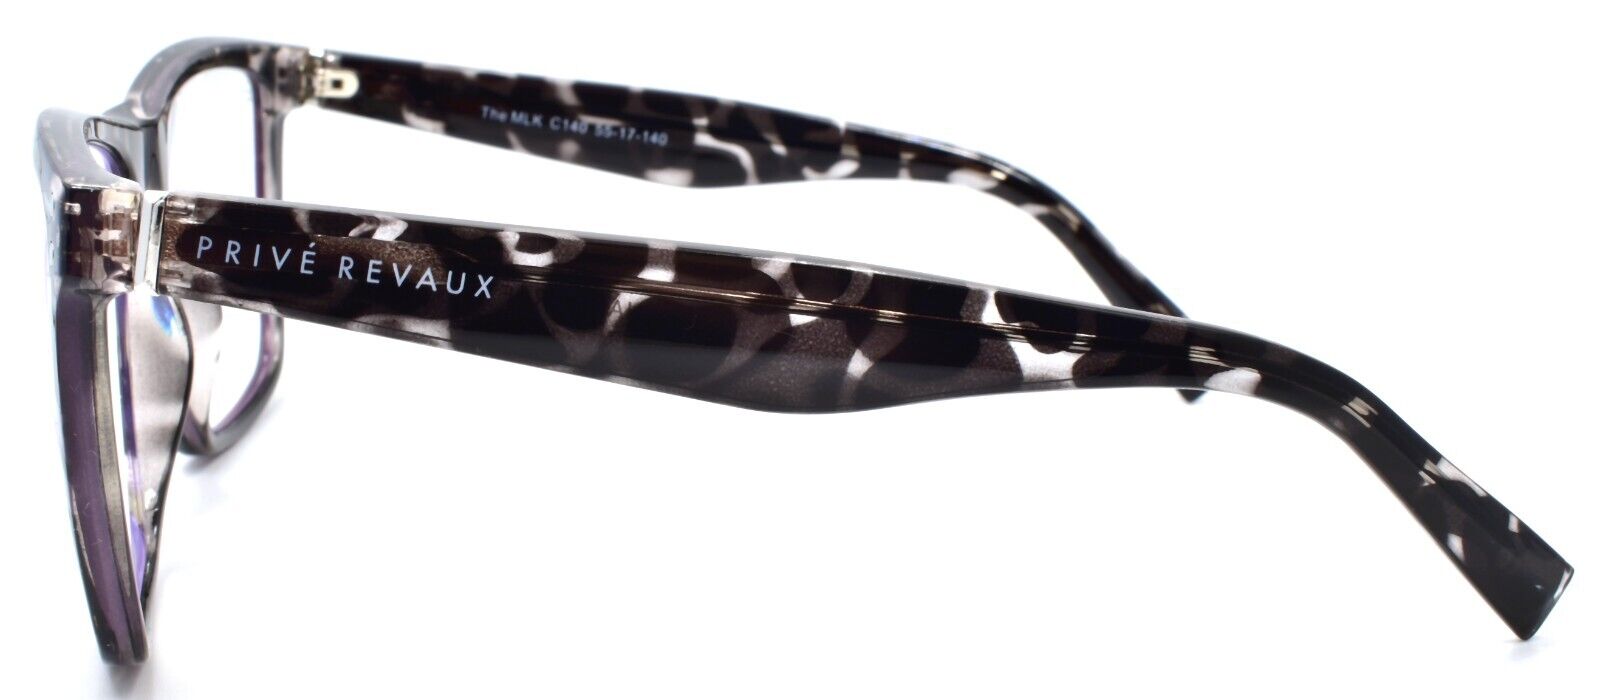 3-Prive Revaux The MLK C140 Eyeglasses Blue Light Blocking RX-ready Dark Tortoise-818893027406-IKSpecs